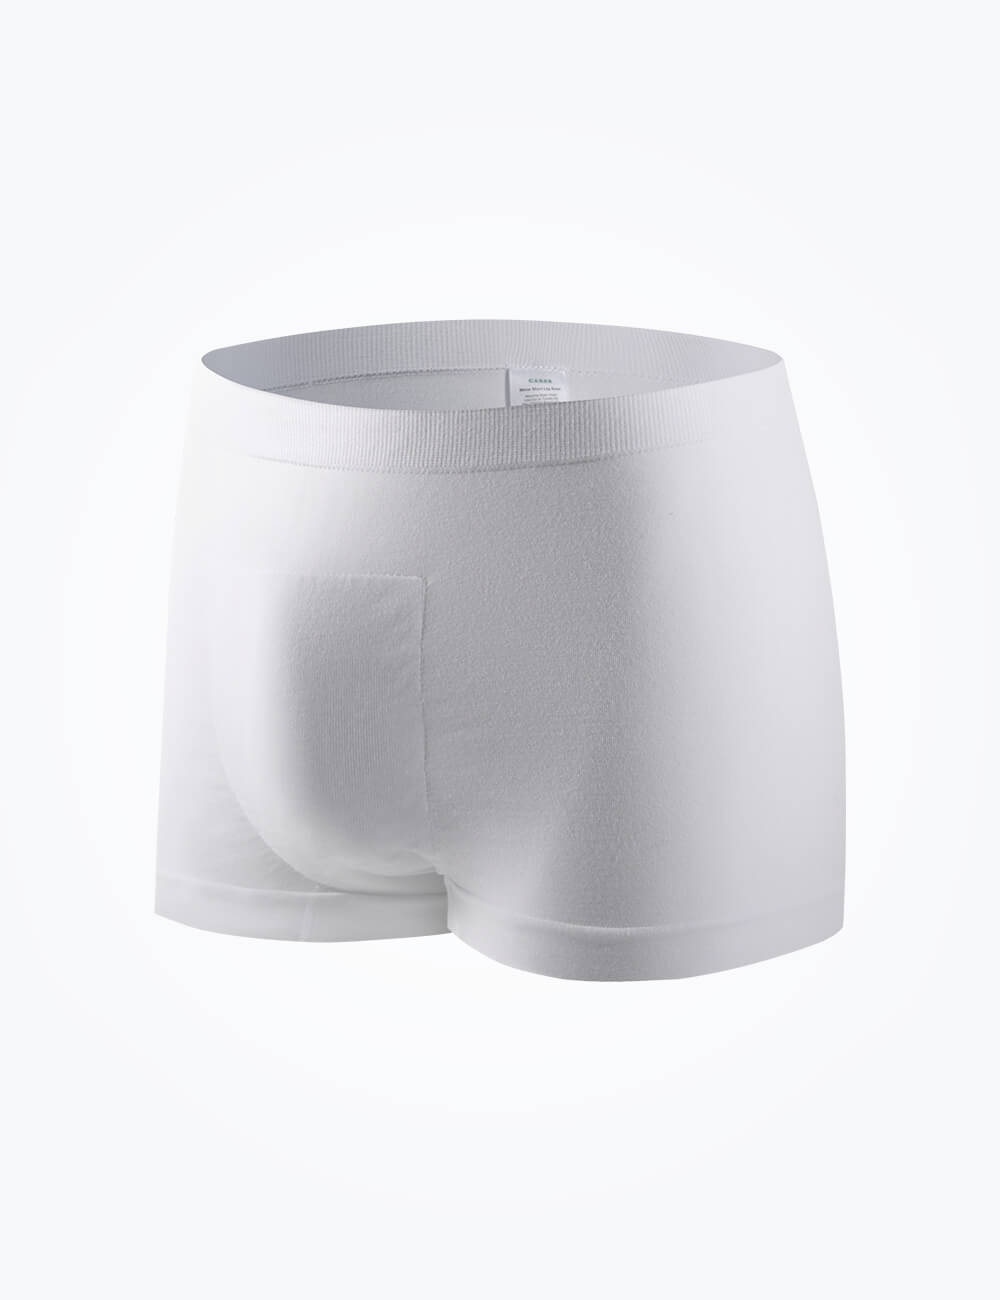 Assurance Incontinence Disposable Underwear Men Size Saudi Arabia